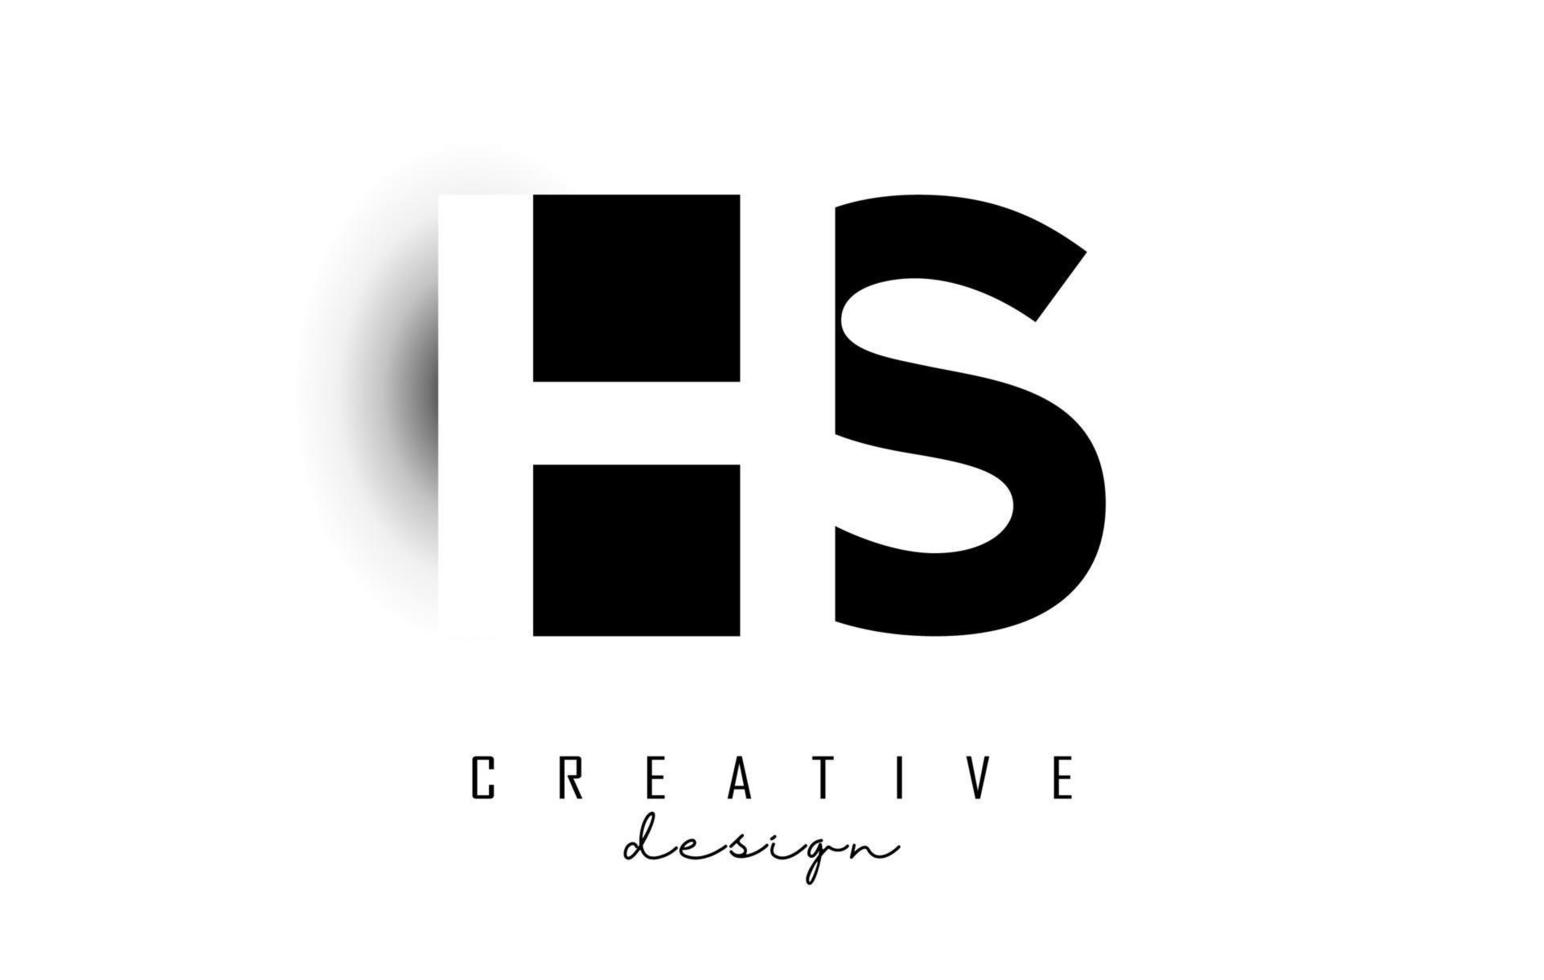 hs bokstäver logotyp med negativ utrymme design. vektor illustration med med geometrisk typografi.